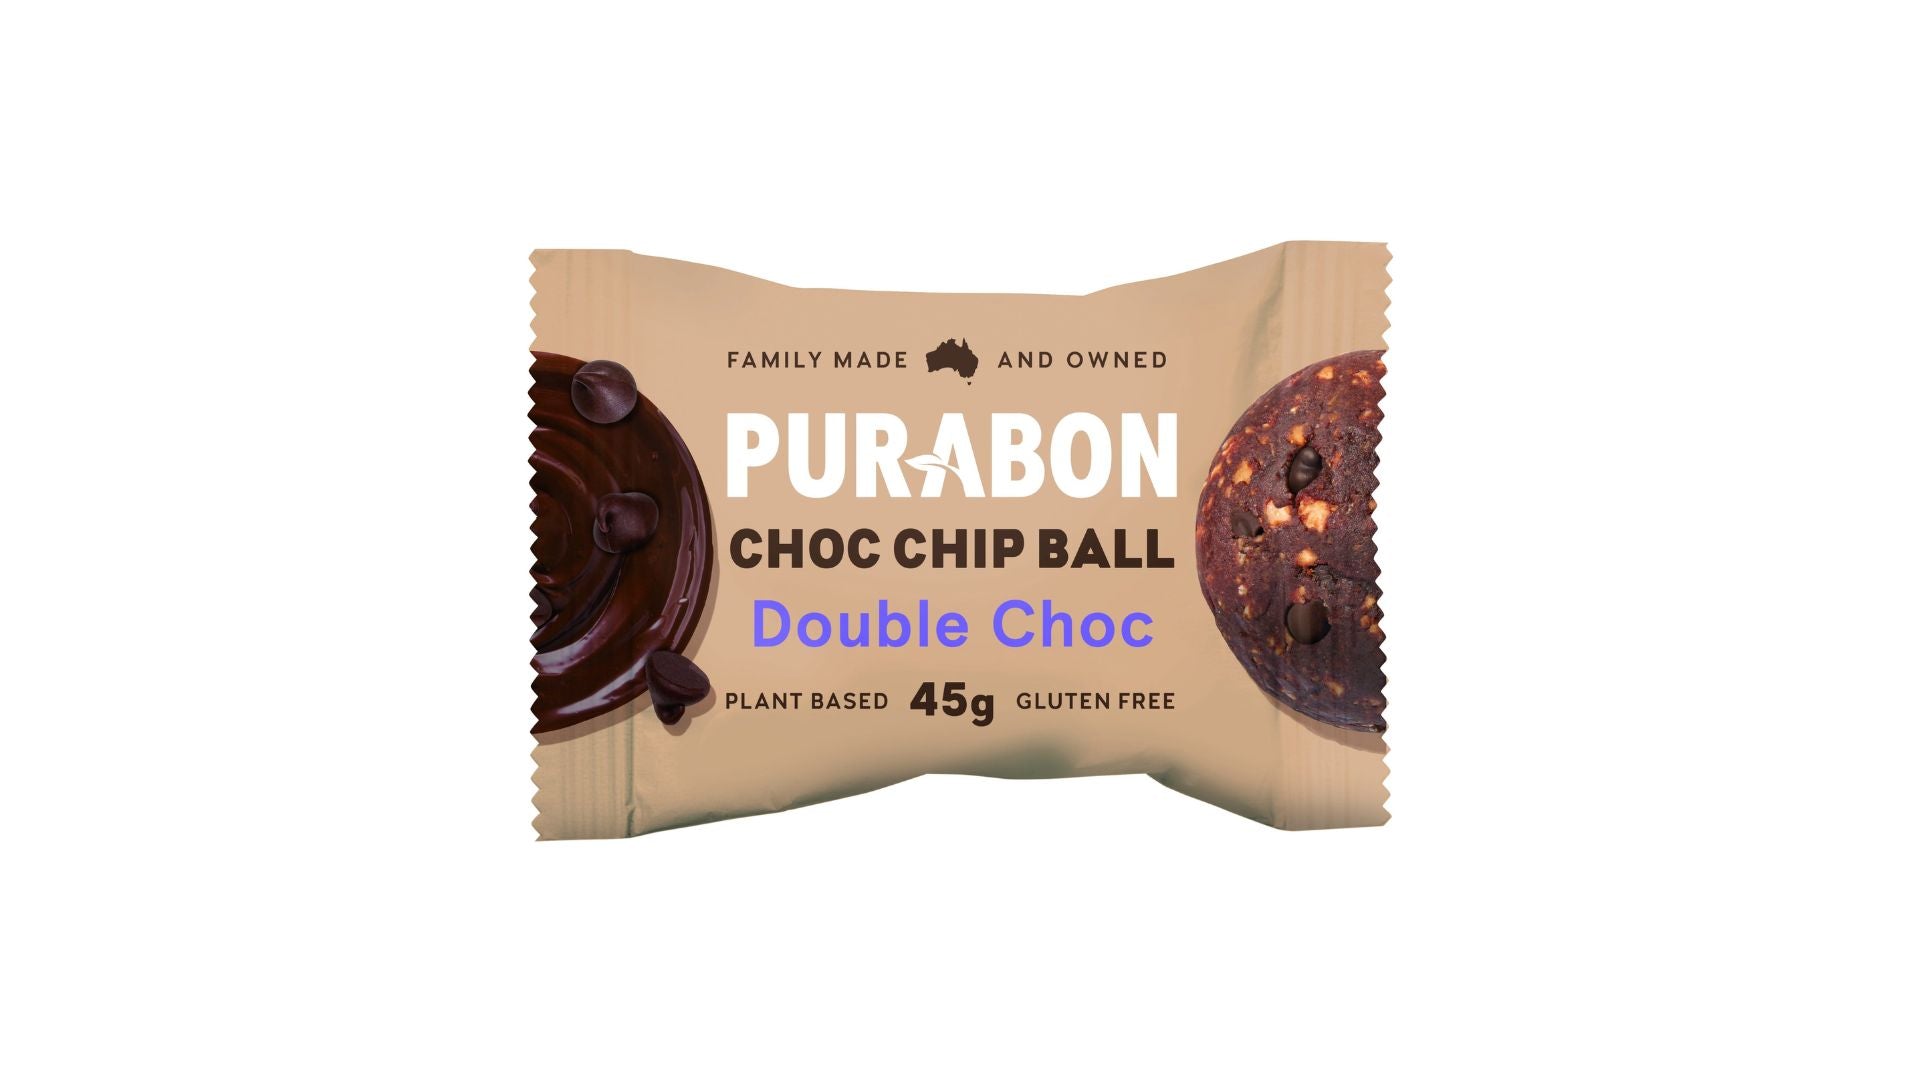 Purabon Choc Chip Ball Double Choc 45g